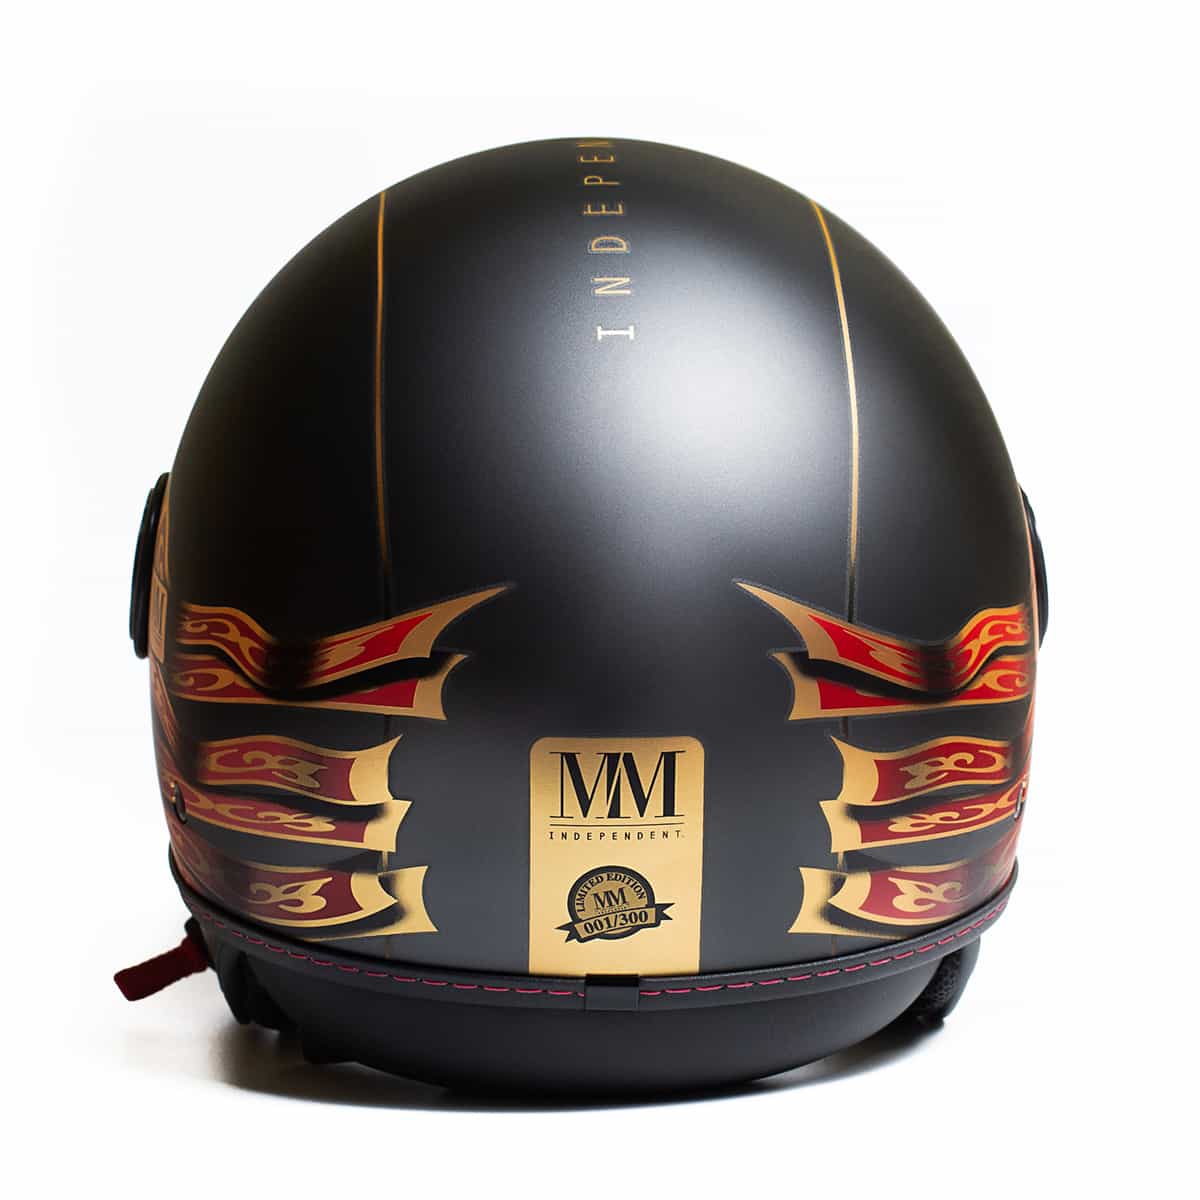 Veneto helmet rear view